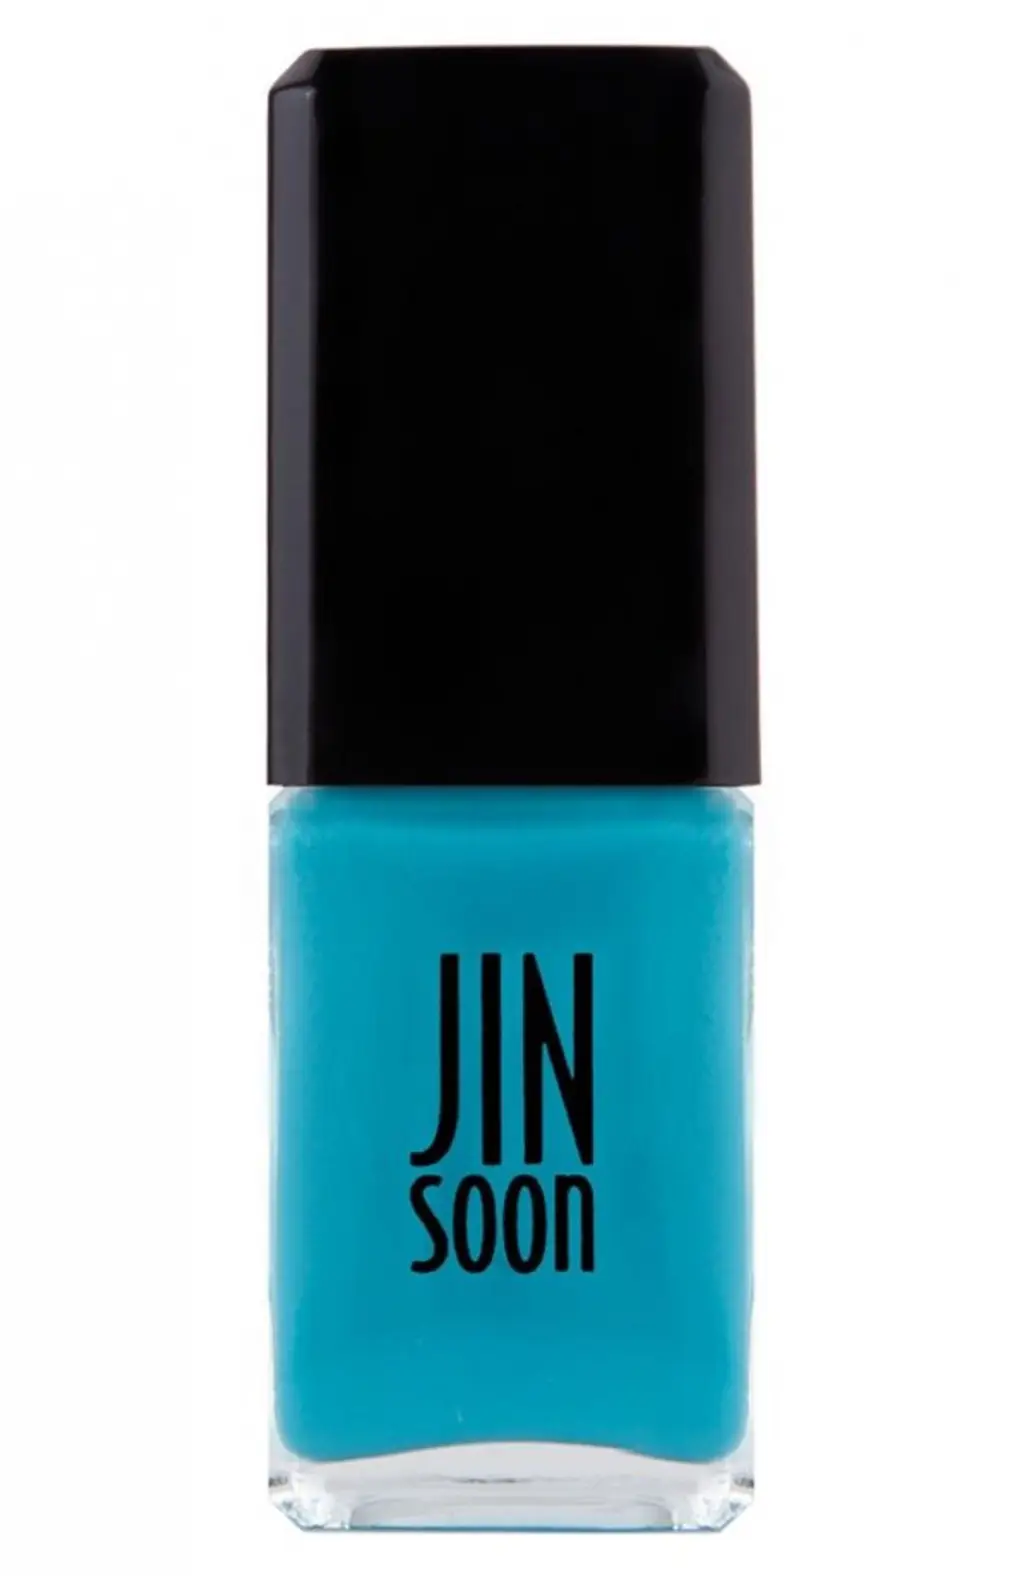 Jin Soon,nail polish,nail care,electric blue,cosmetics,